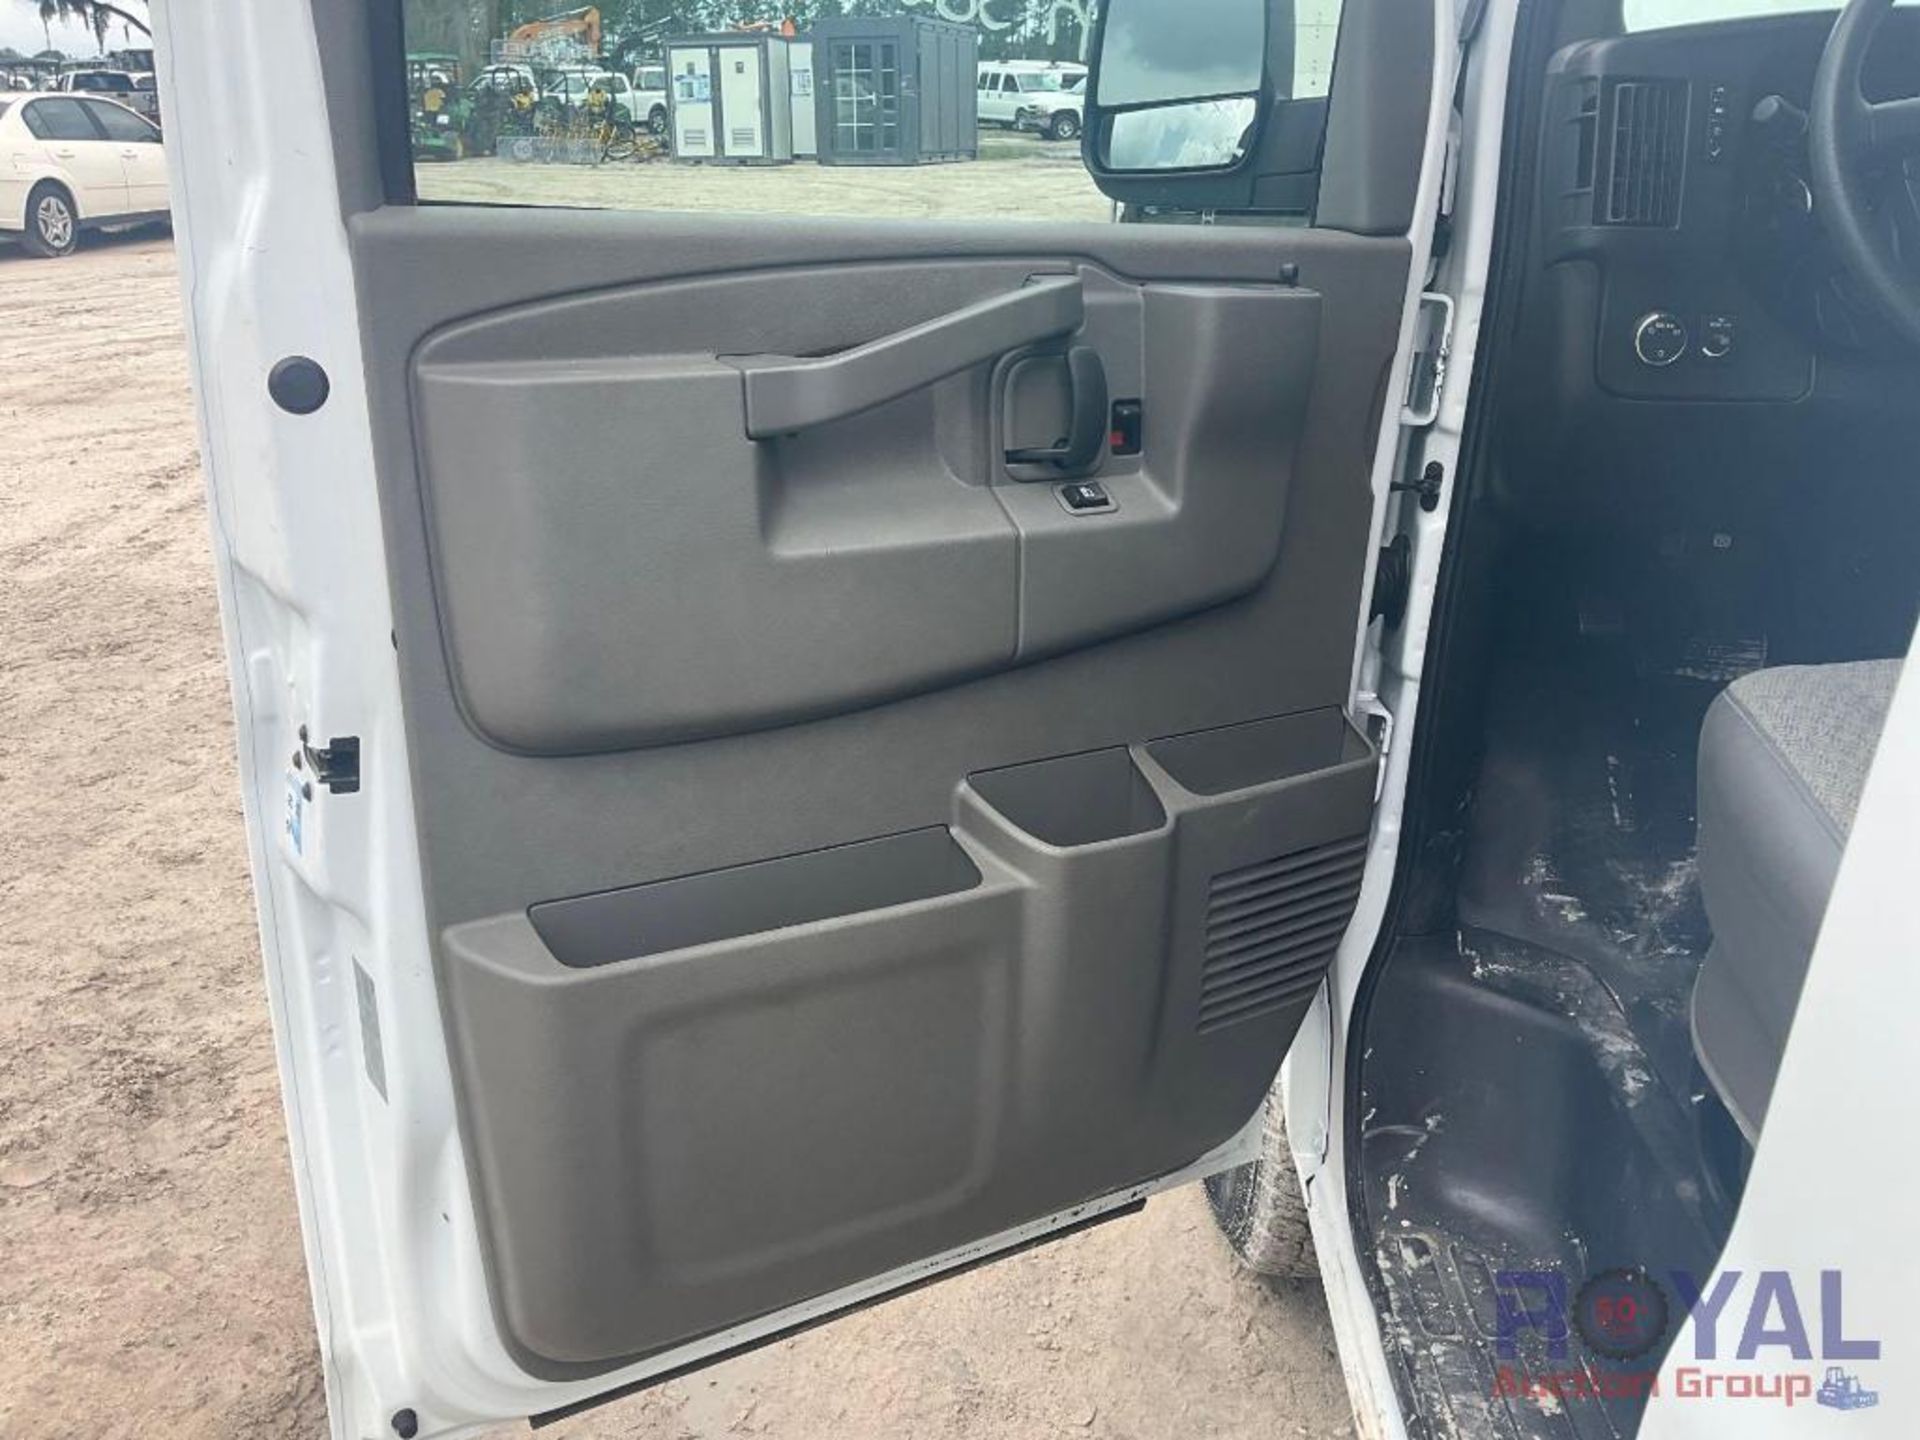 2019 Chevy Express Cargo Van - Image 16 of 26